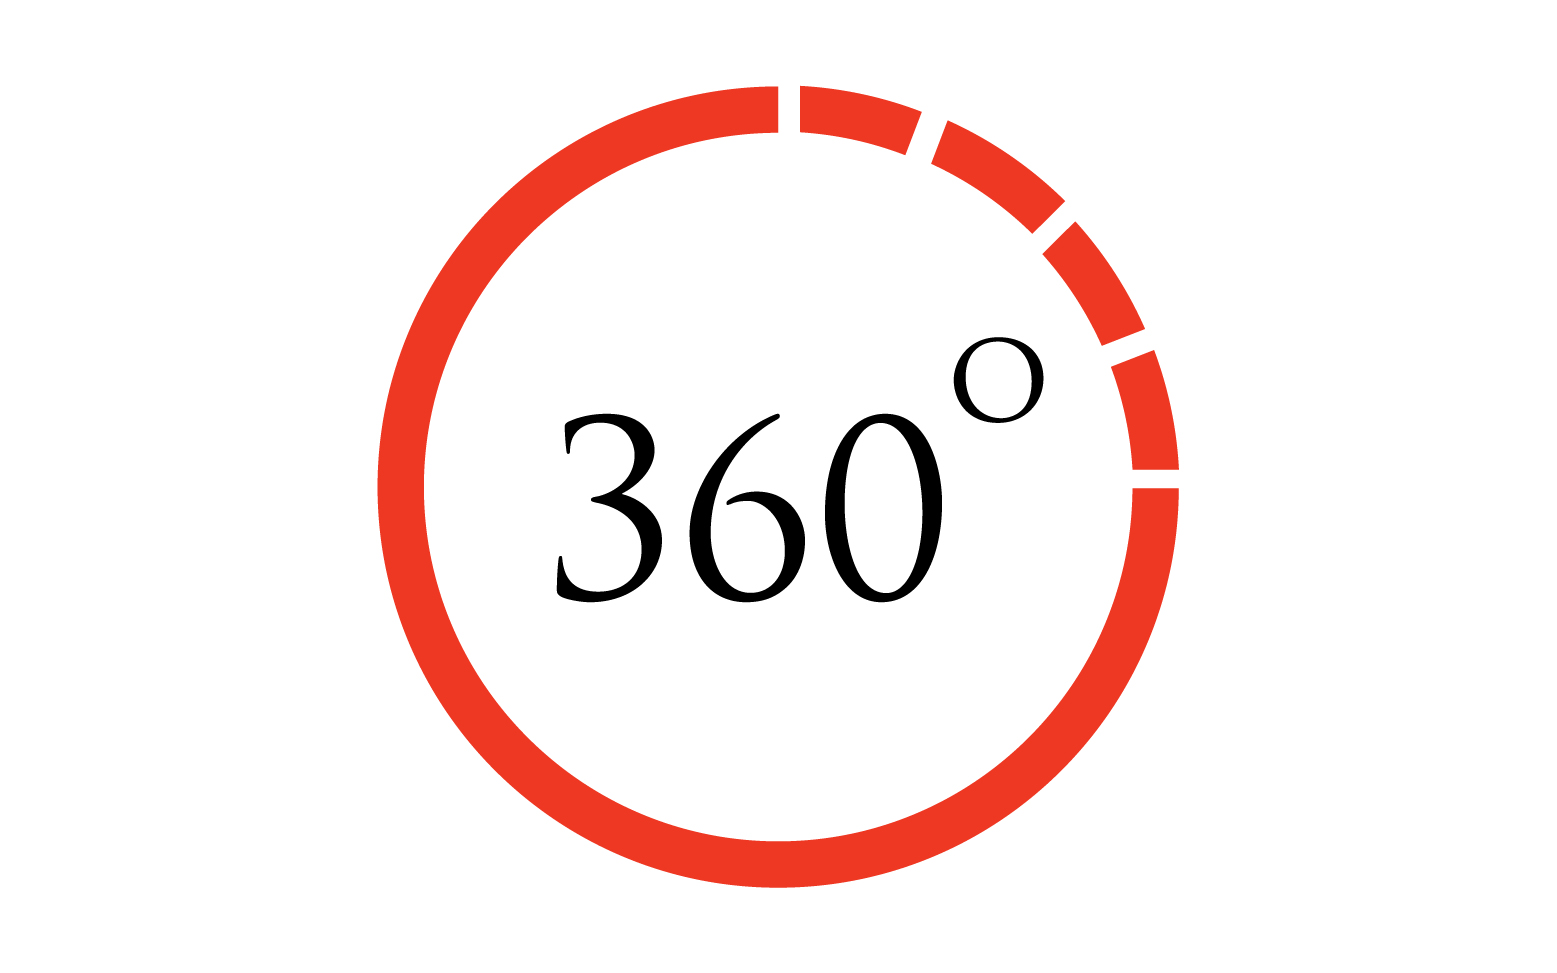 360 degree angle rotation icon symbol logo version v13